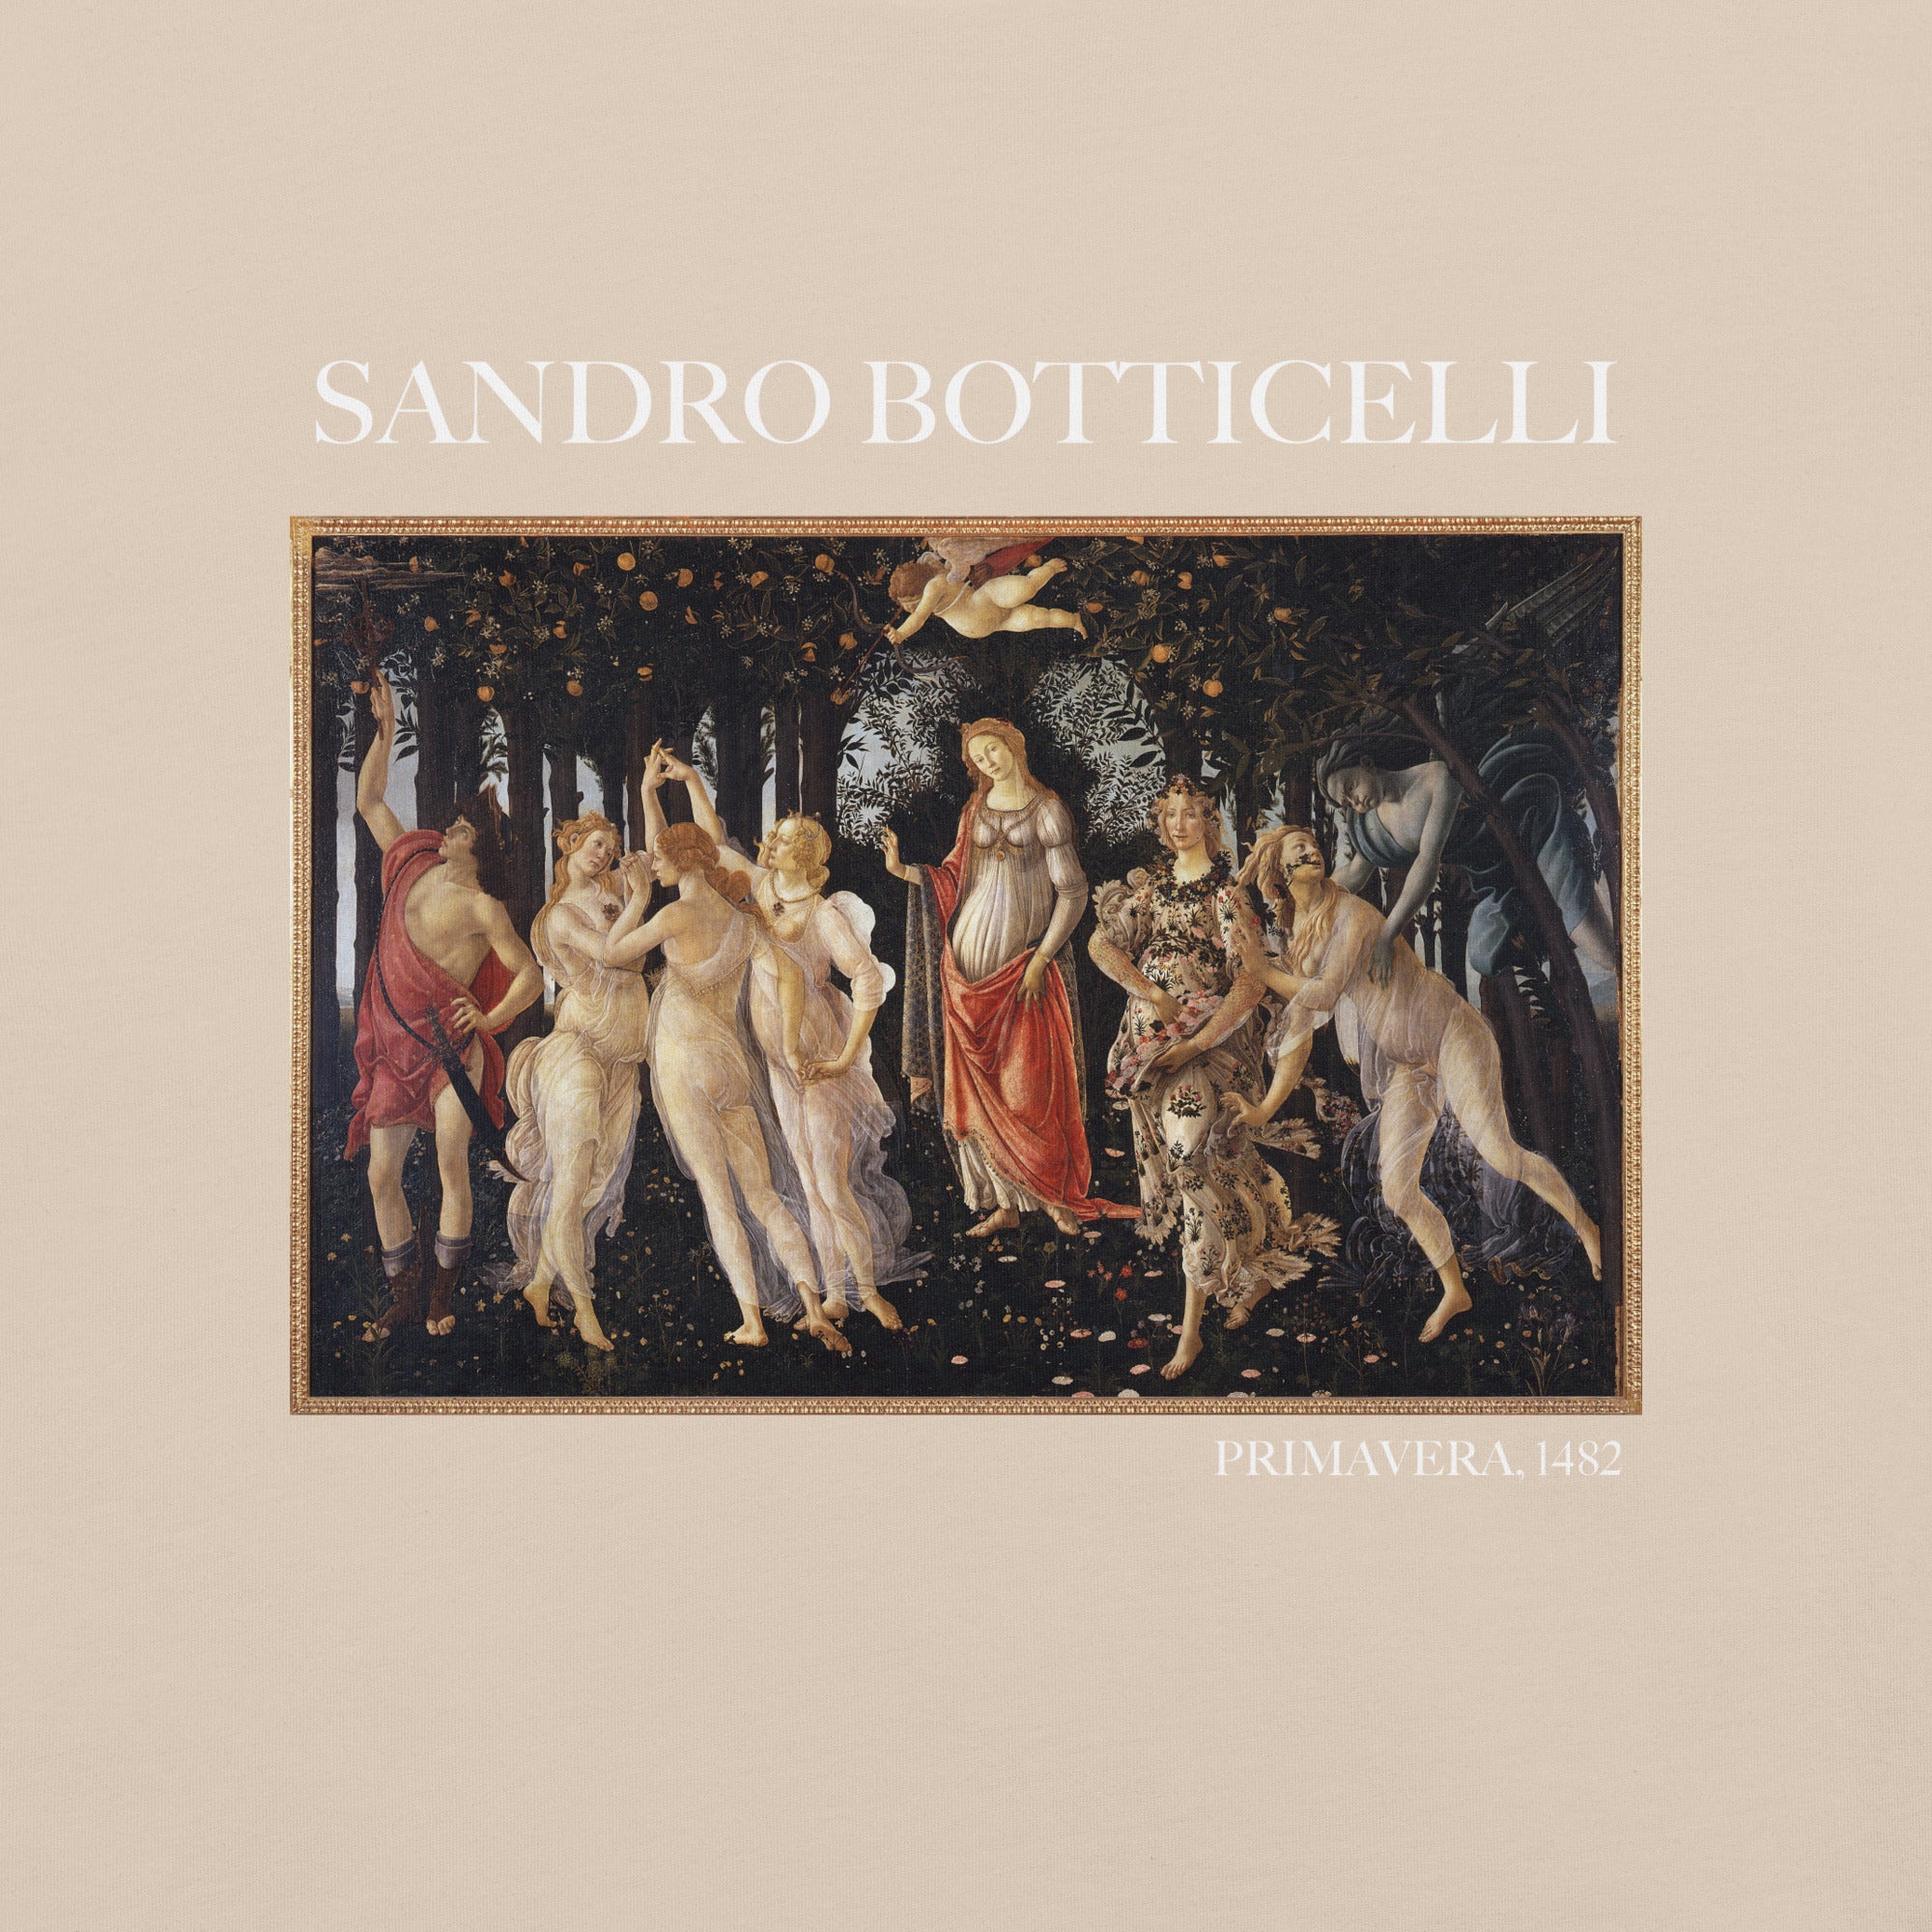 Sandro Botticelli 'Primavera' Famous Painting T-Shirt | Unisex Classic Art Tee